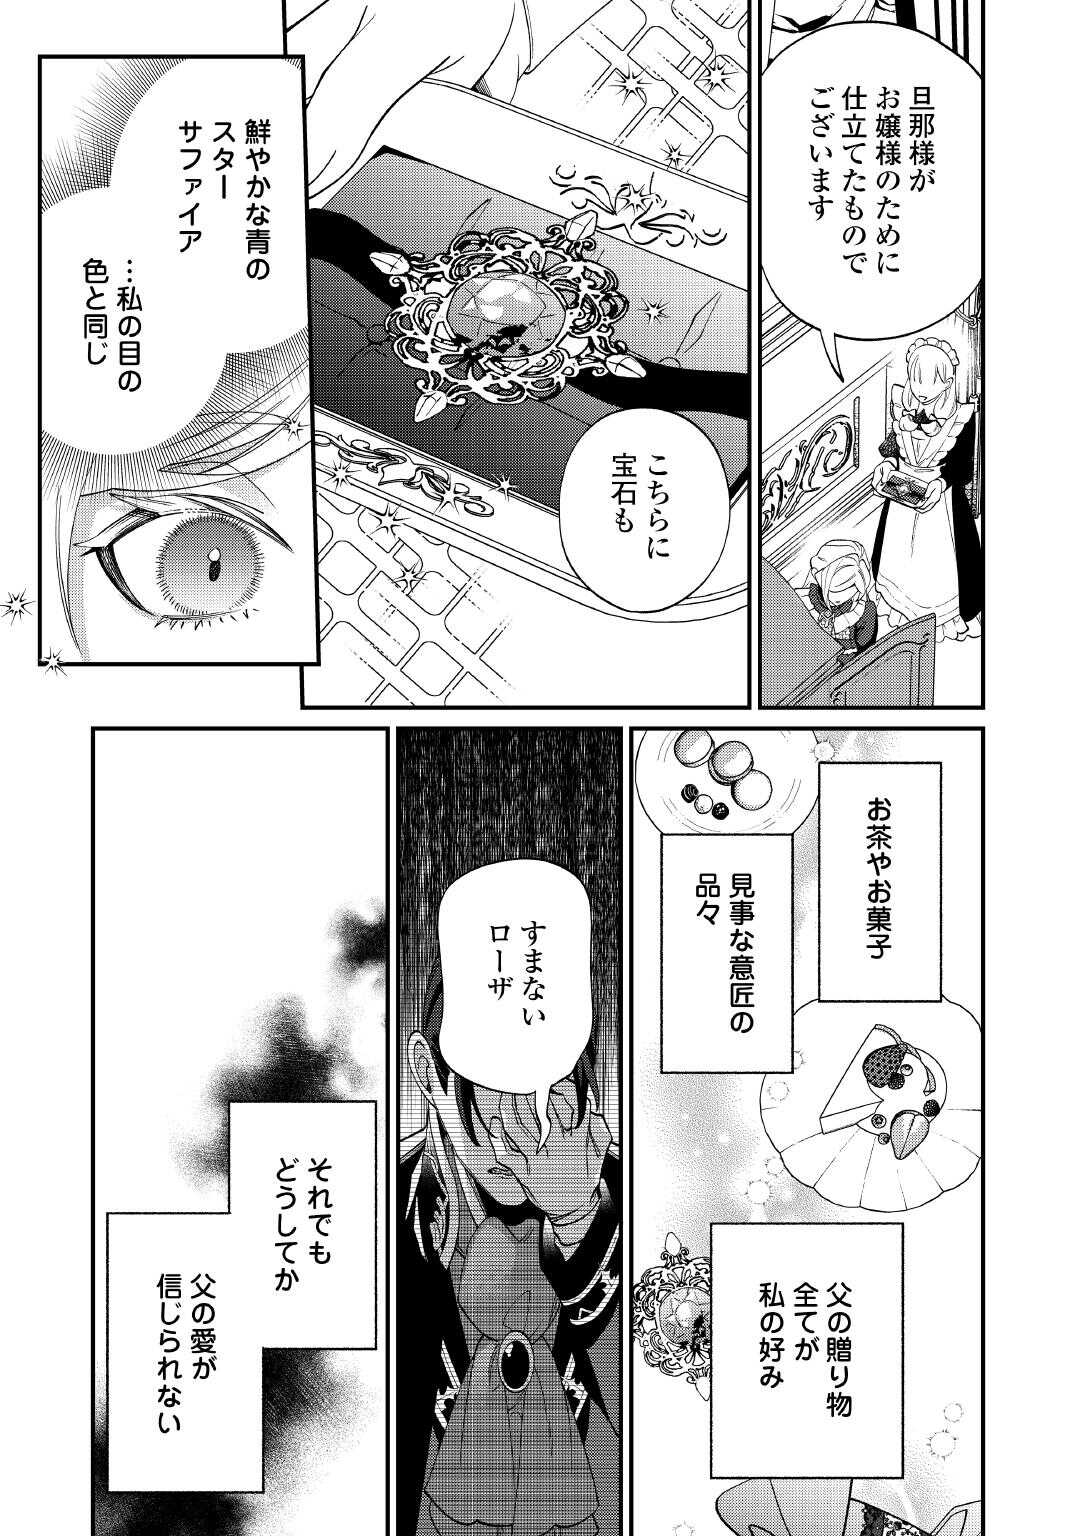 Karei ni Rien shite Misemasuwa! - Chapter 17.2 - Page 2